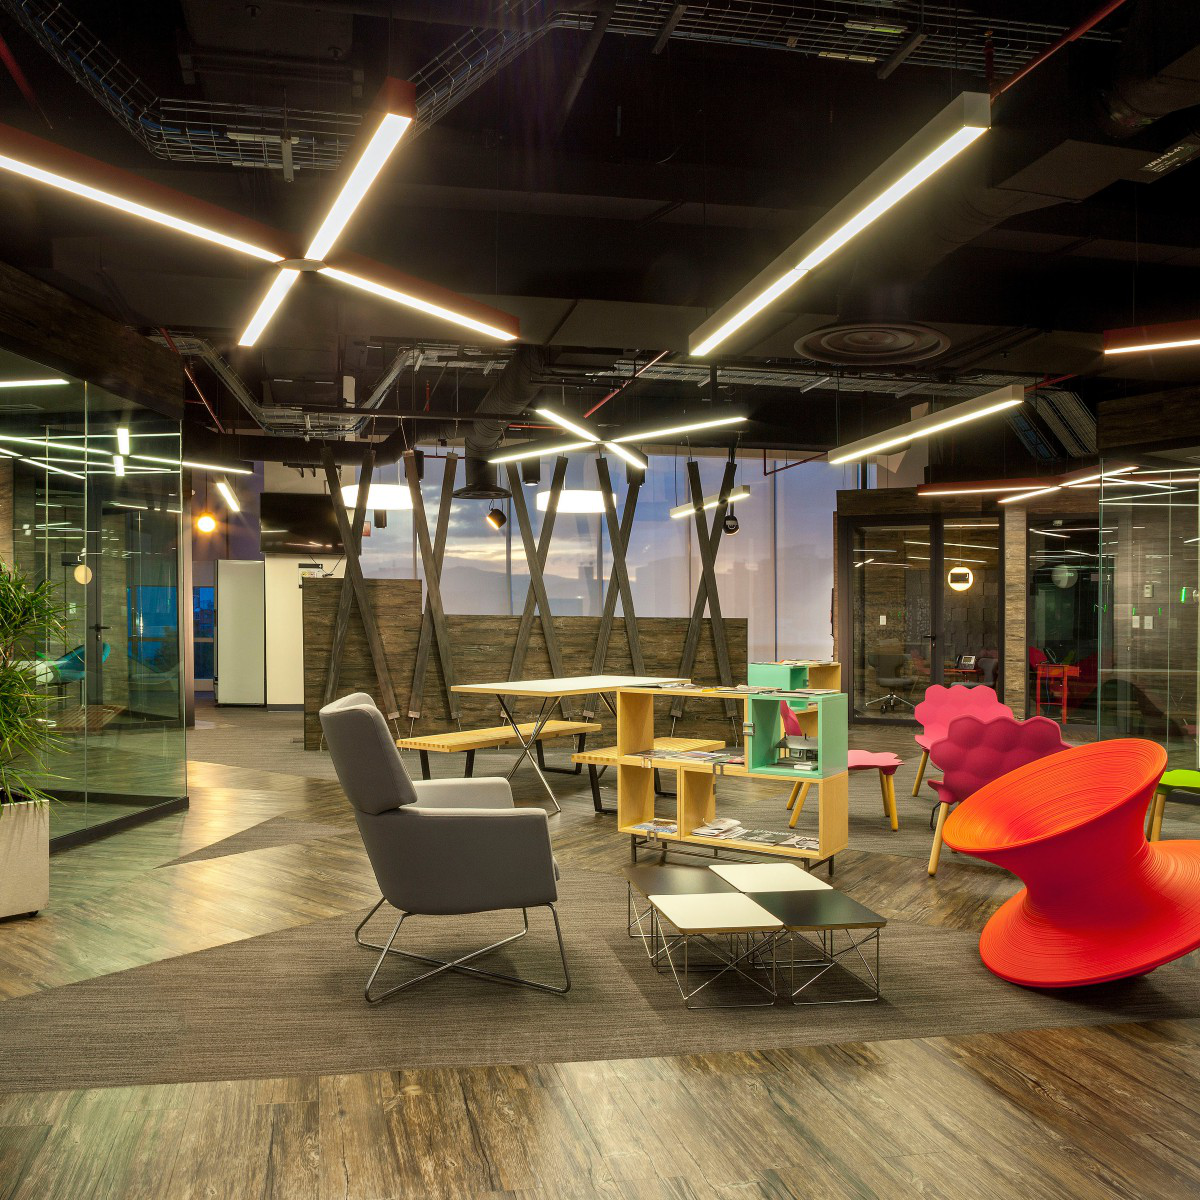 Axa Office Space by Juan Carlos Baumgartner